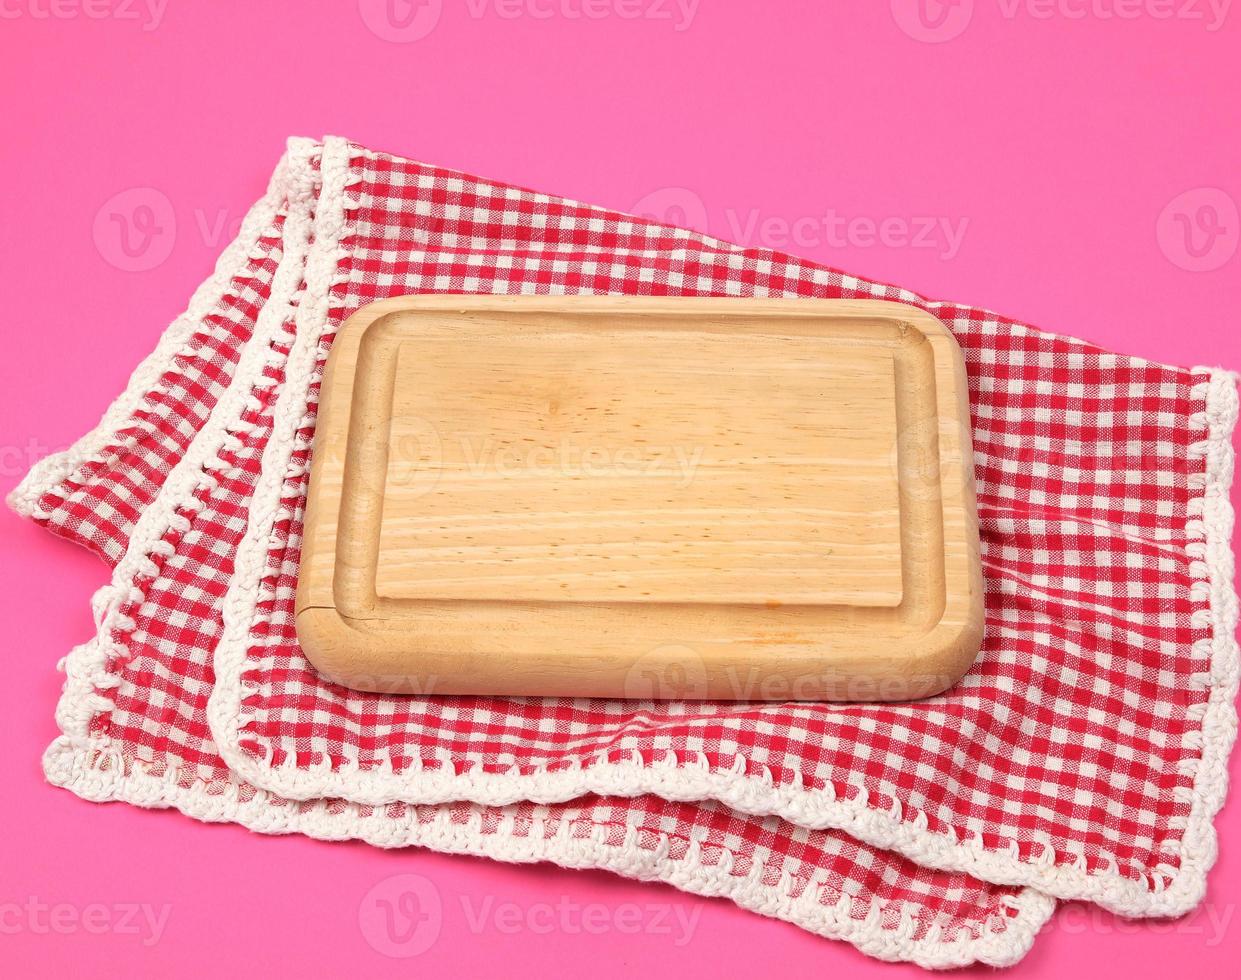 klein keuken houten snijdend bord en wit rood geruit keuken handdoek foto